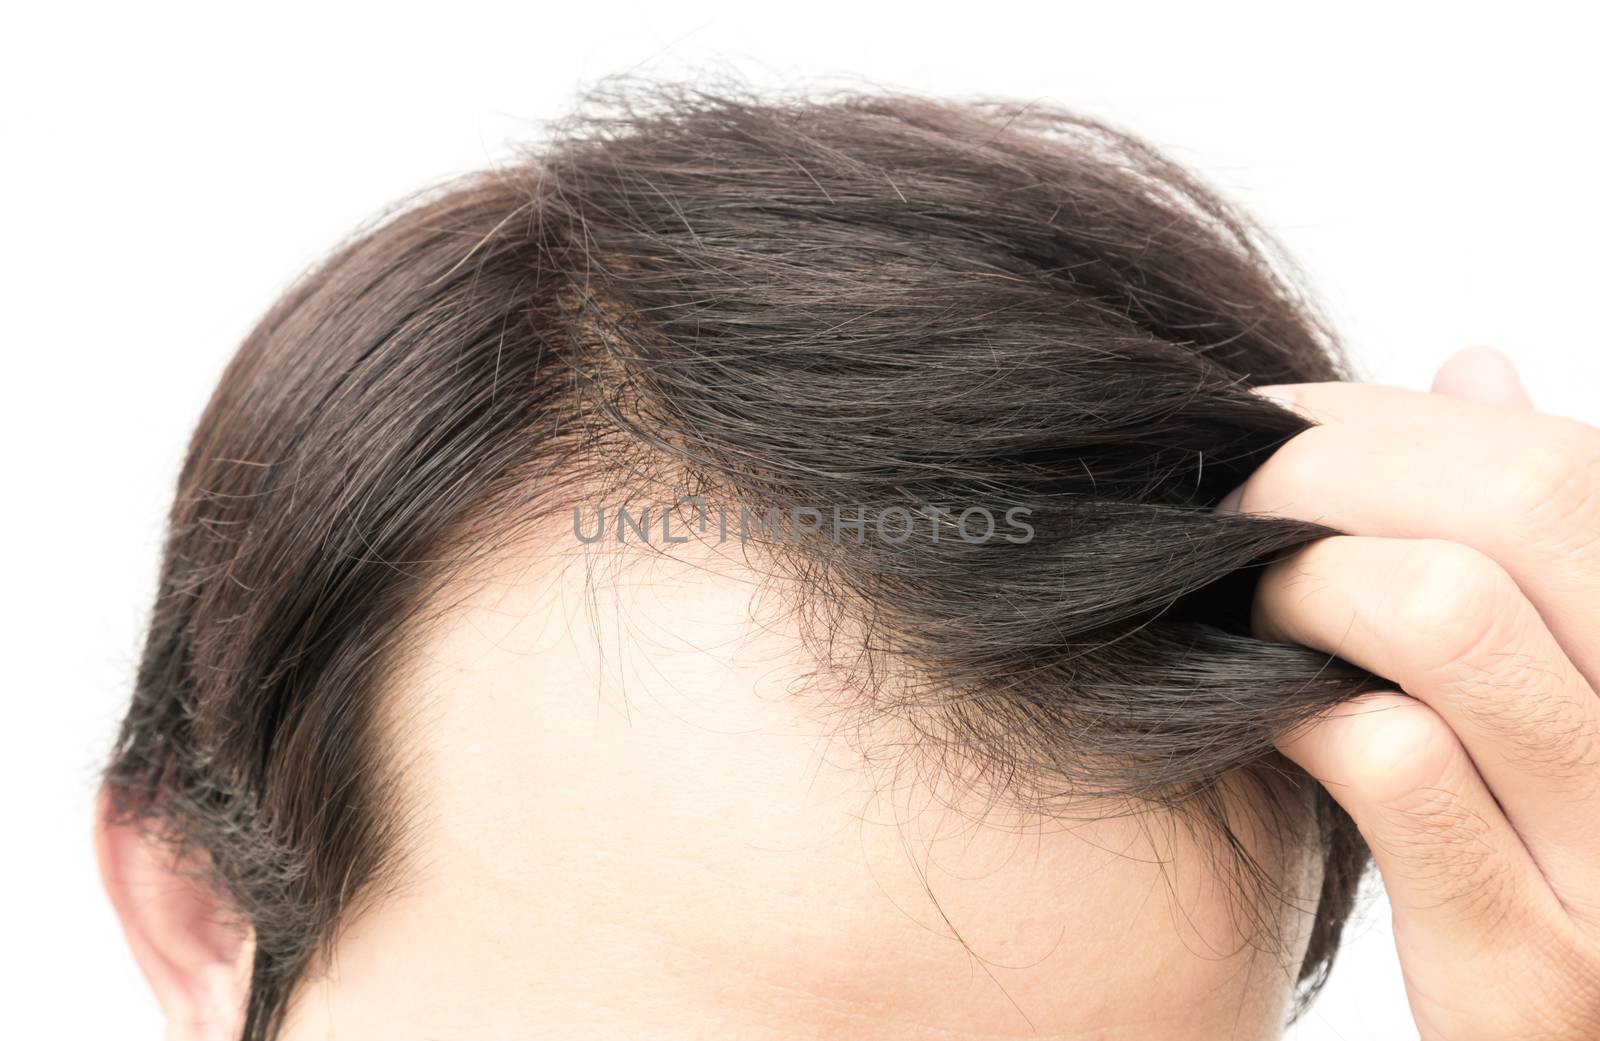 Closeup young man serious hair loss problem for hair loss concep by pt.pongsak@gmail.com